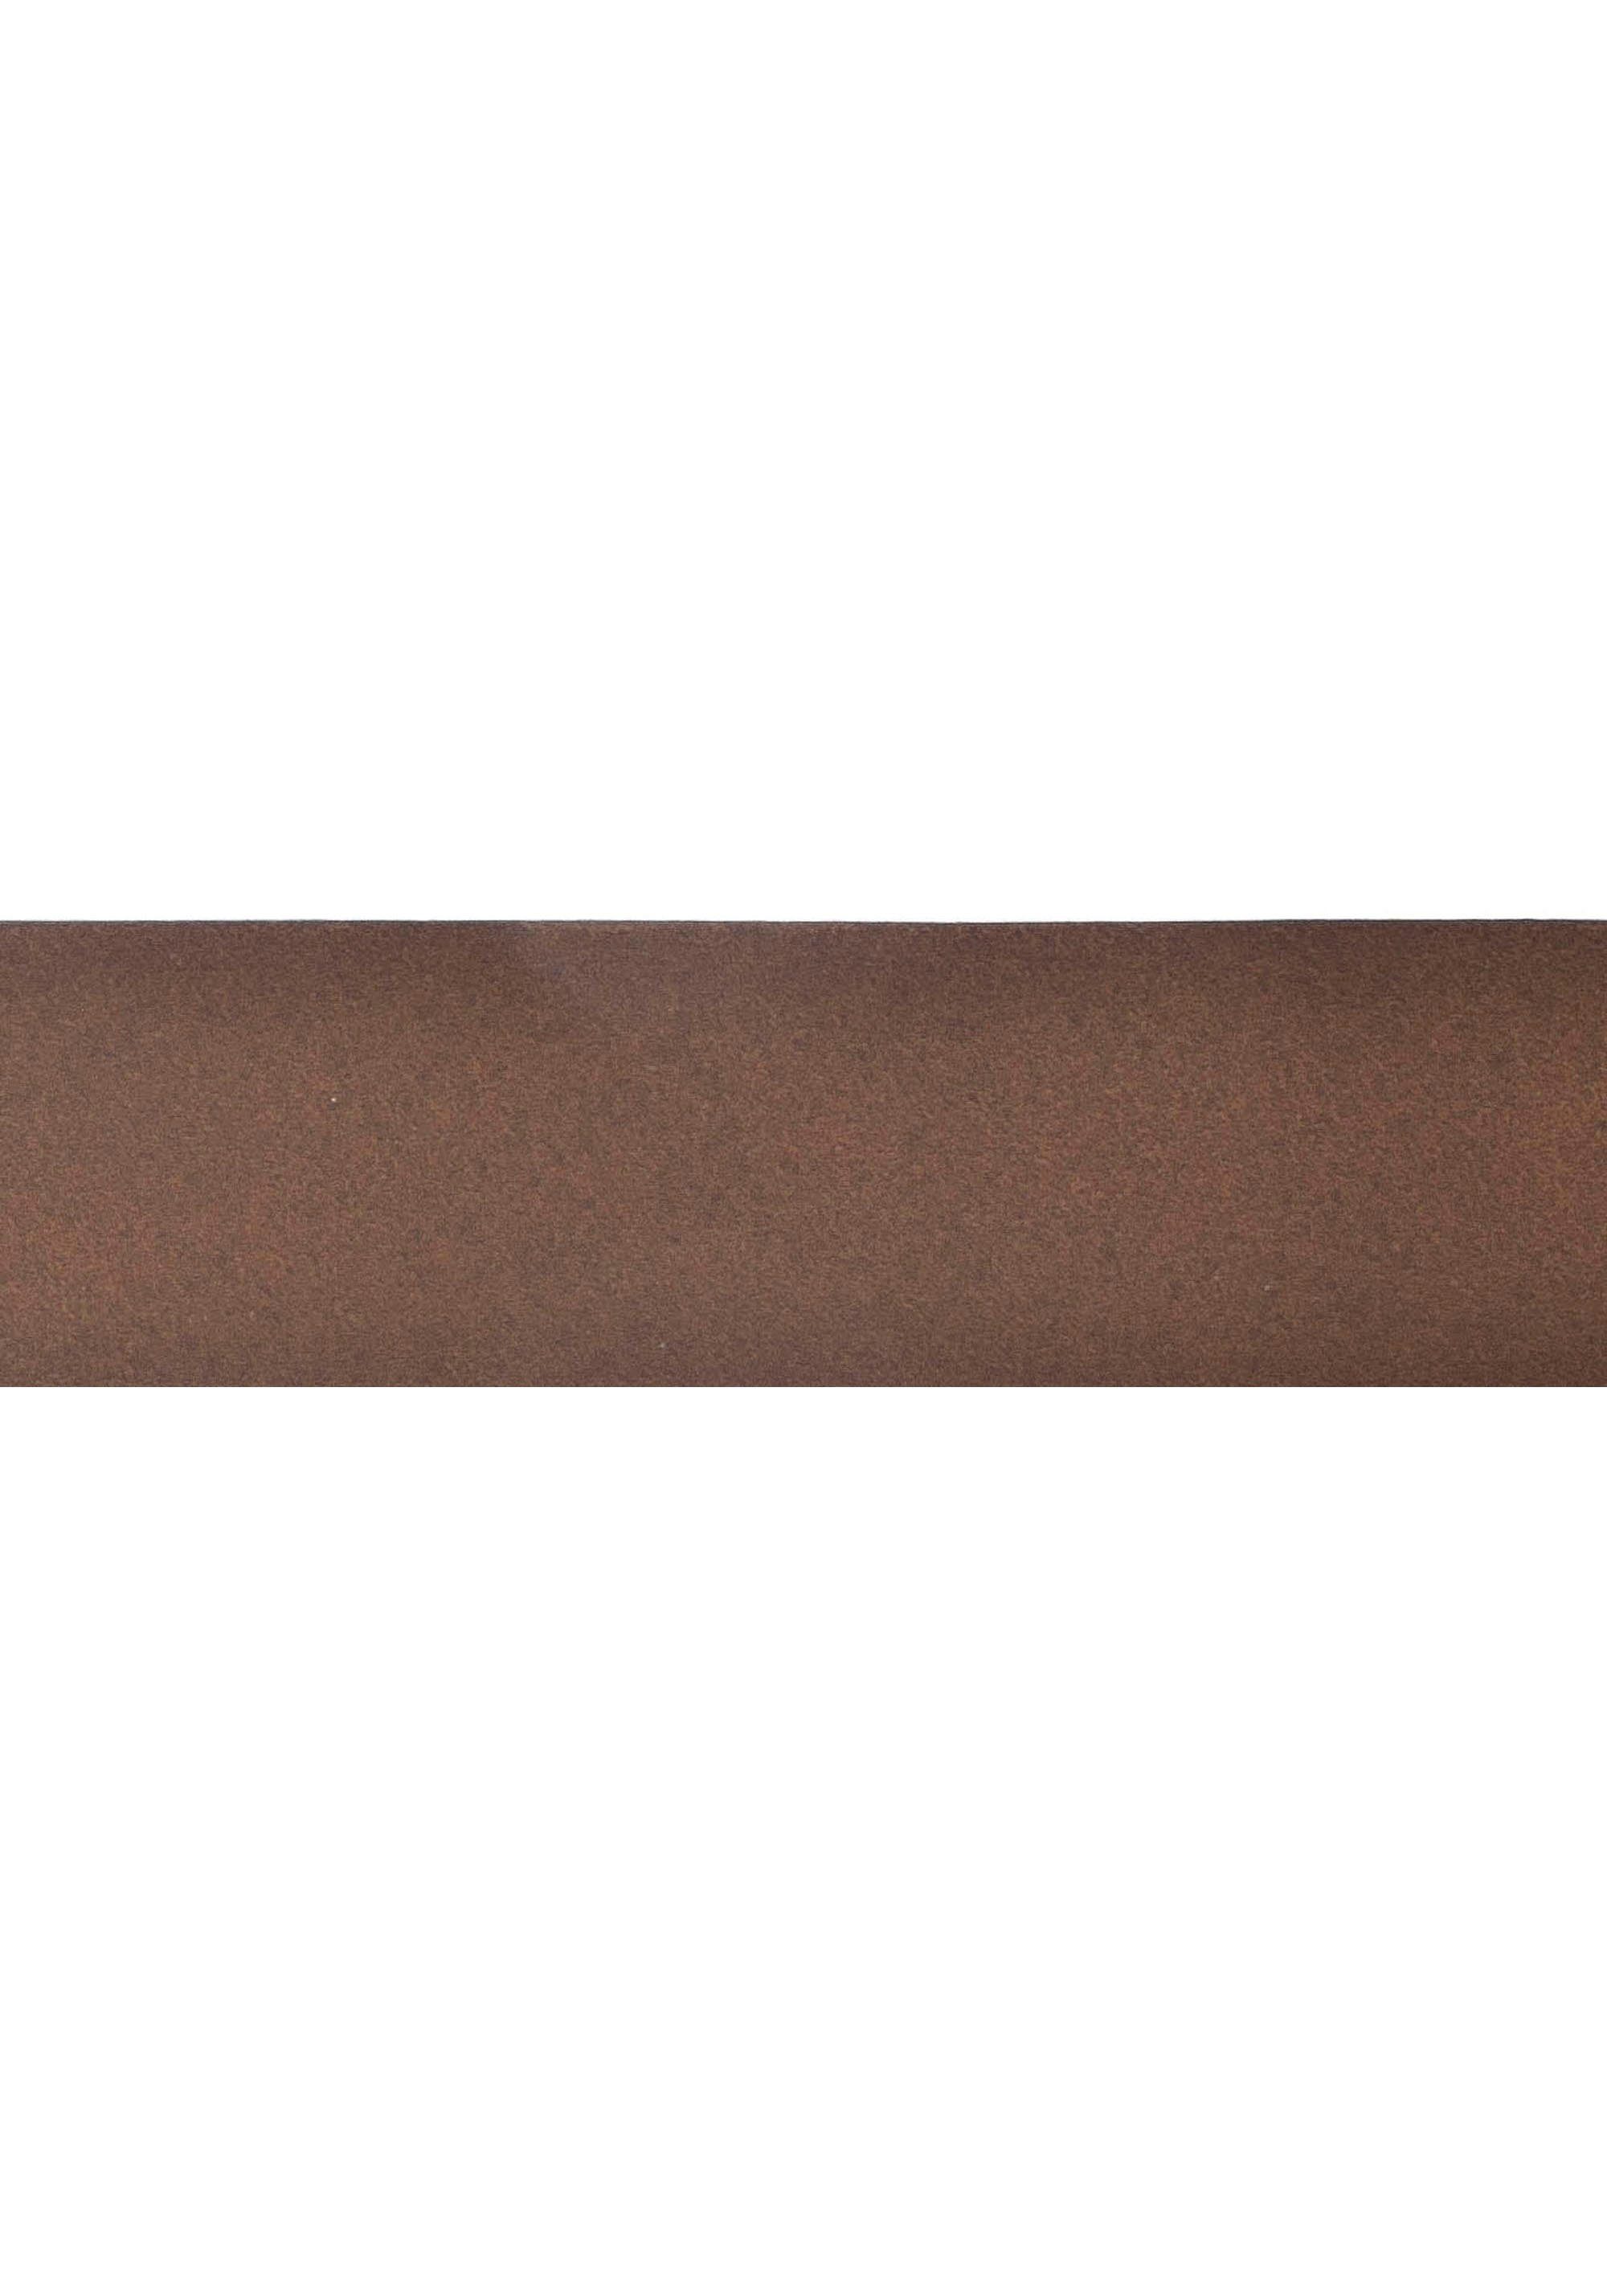 dunkelbraun MUSTANG mit Ledergürtel polierter Schließe